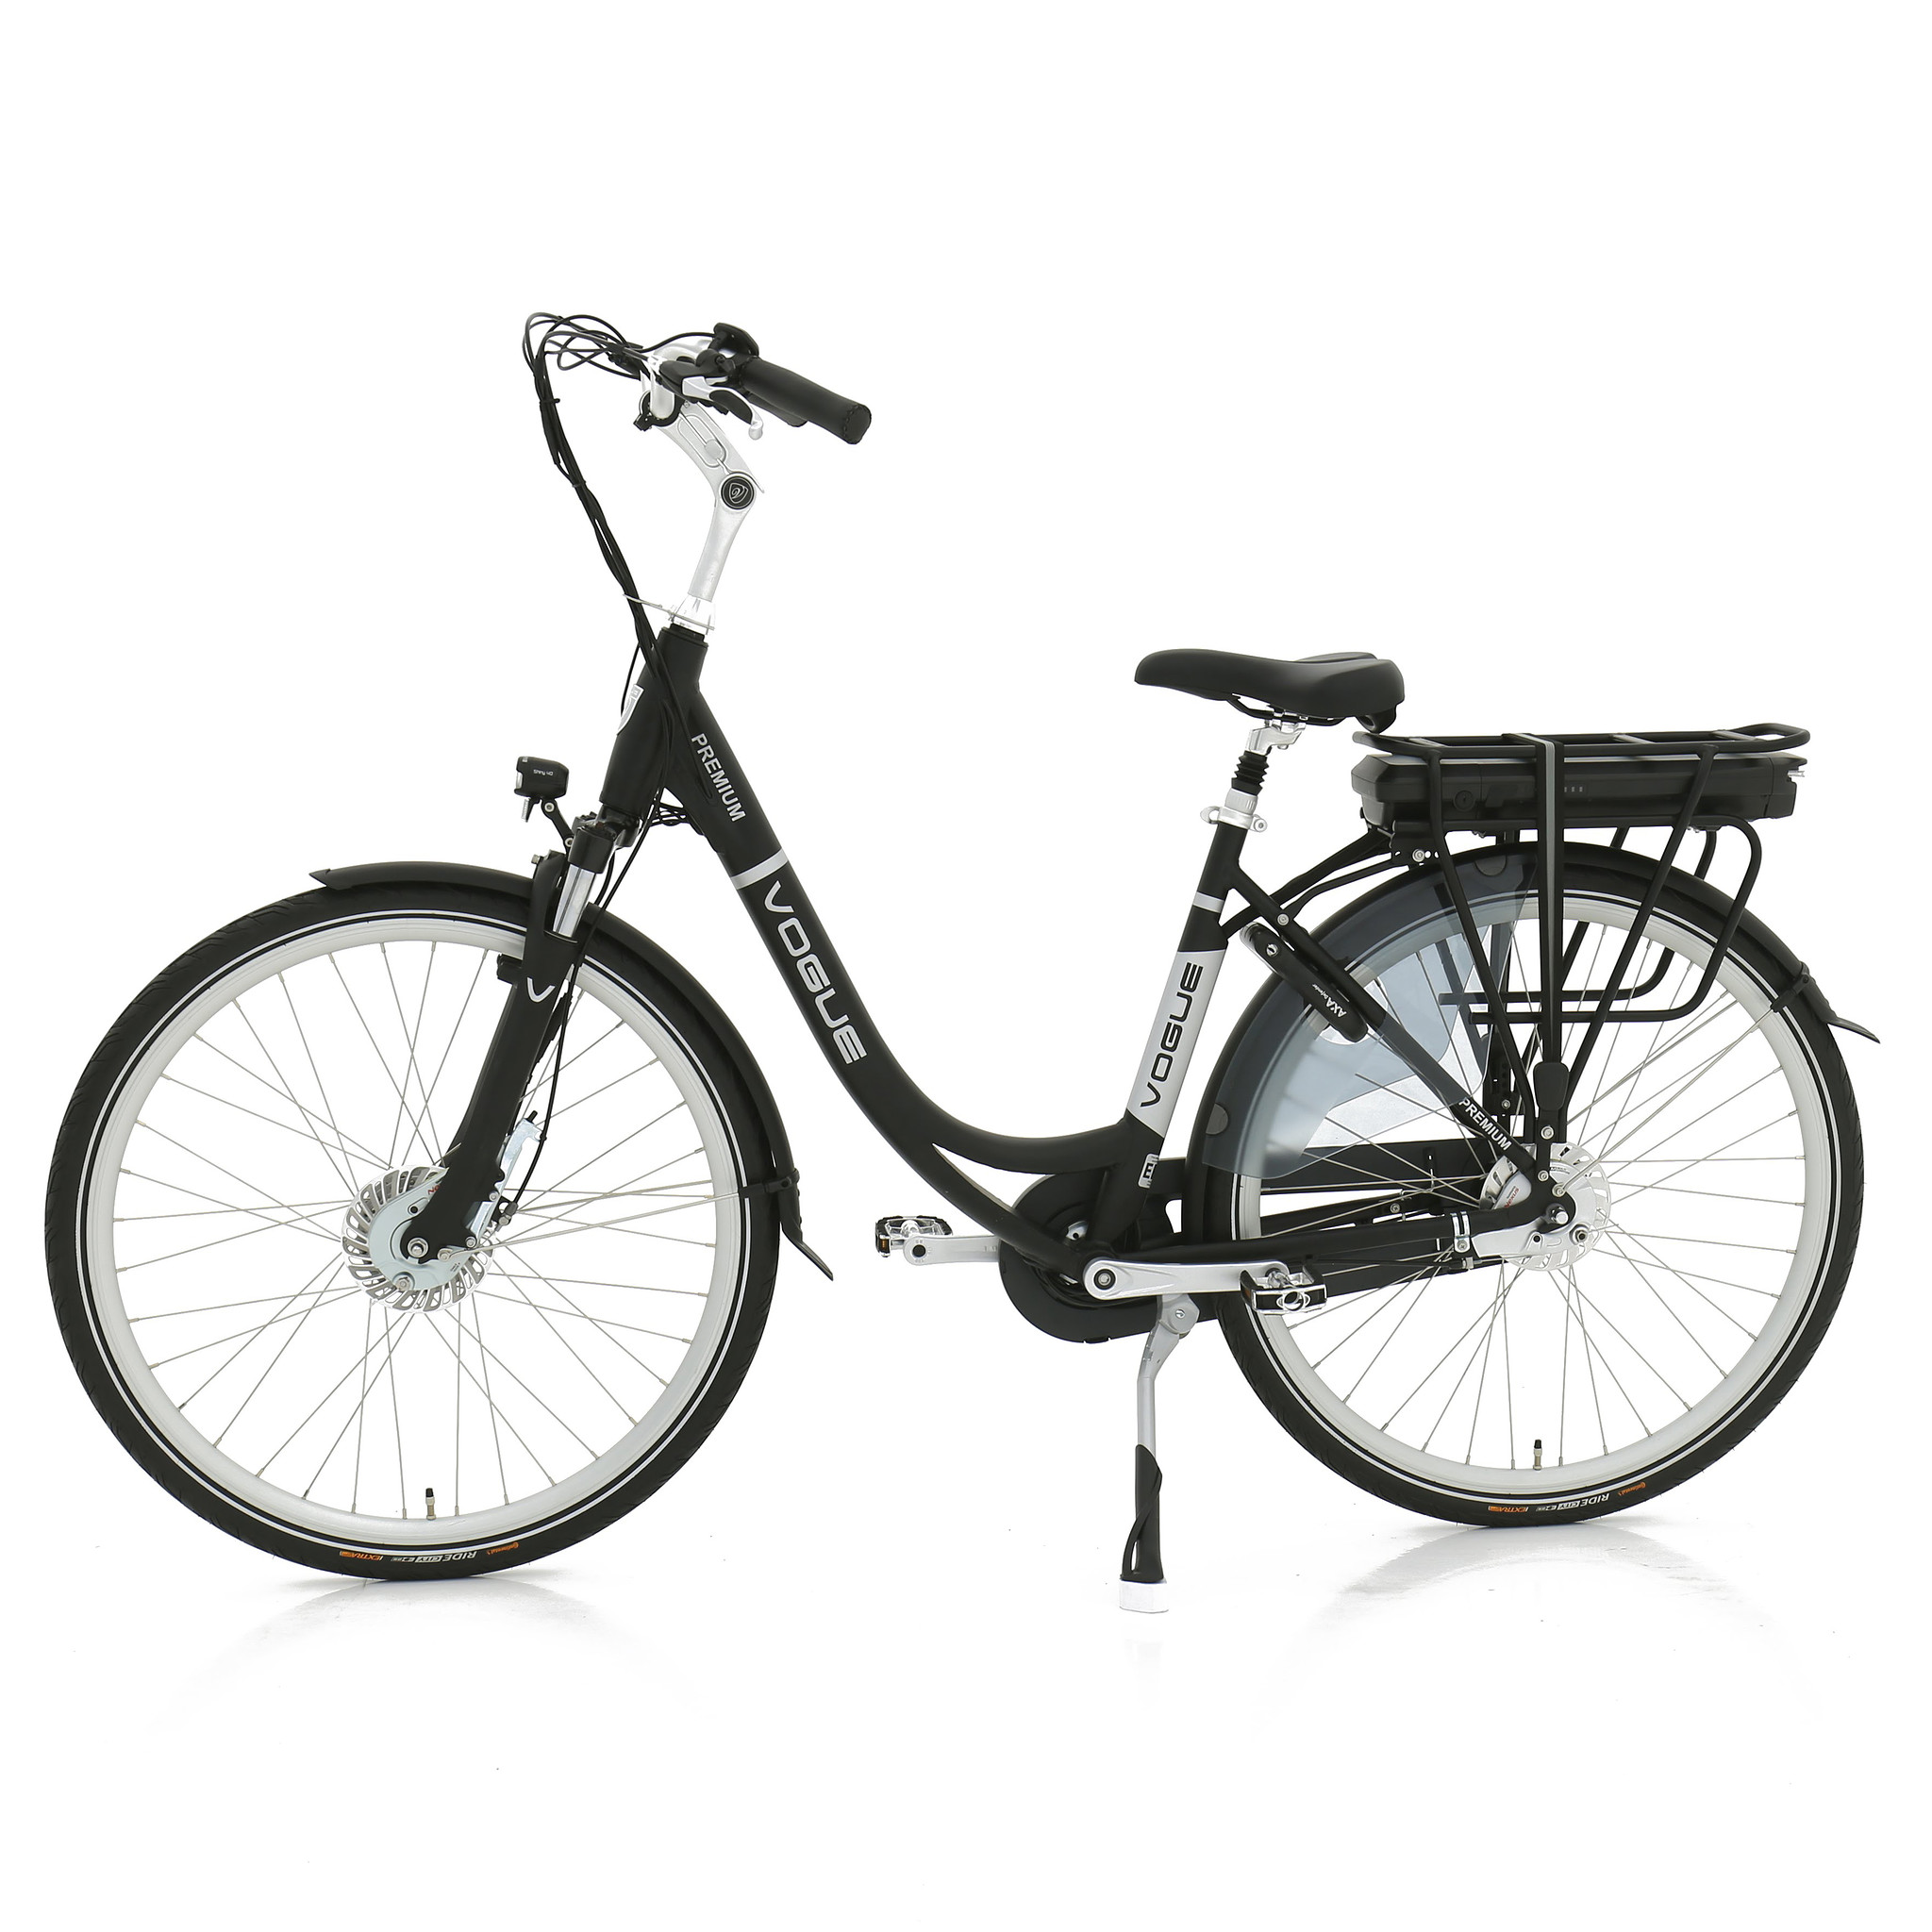 Bende namens embargo Vogue Elektrische fiets Premium Dames 48 cm Mat zwart 468 Wh Mat zwart -  FietsenMagazijn